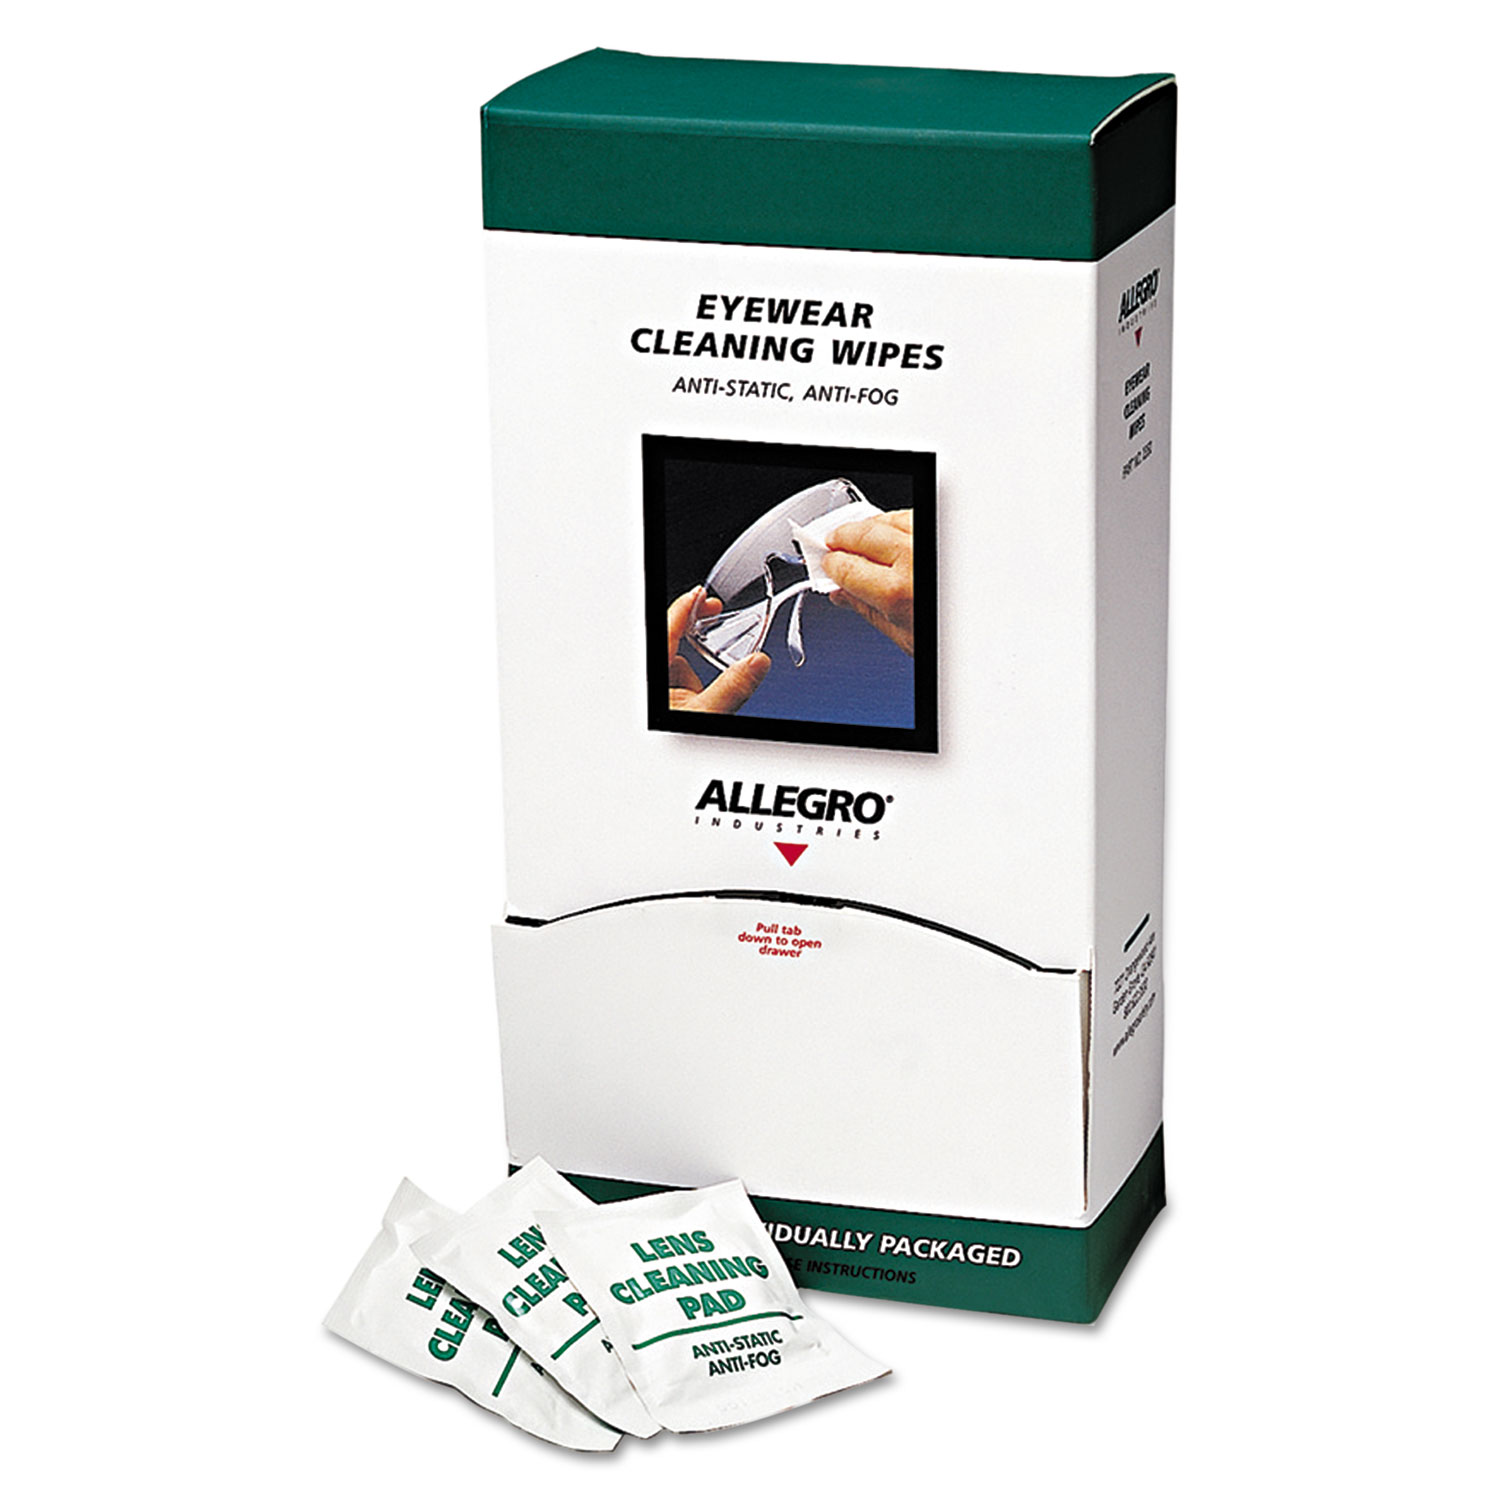  Allegro 350 Eyewear Cleaning Wipes, 5 in x 8, White, 100/Box (ALG0350) 